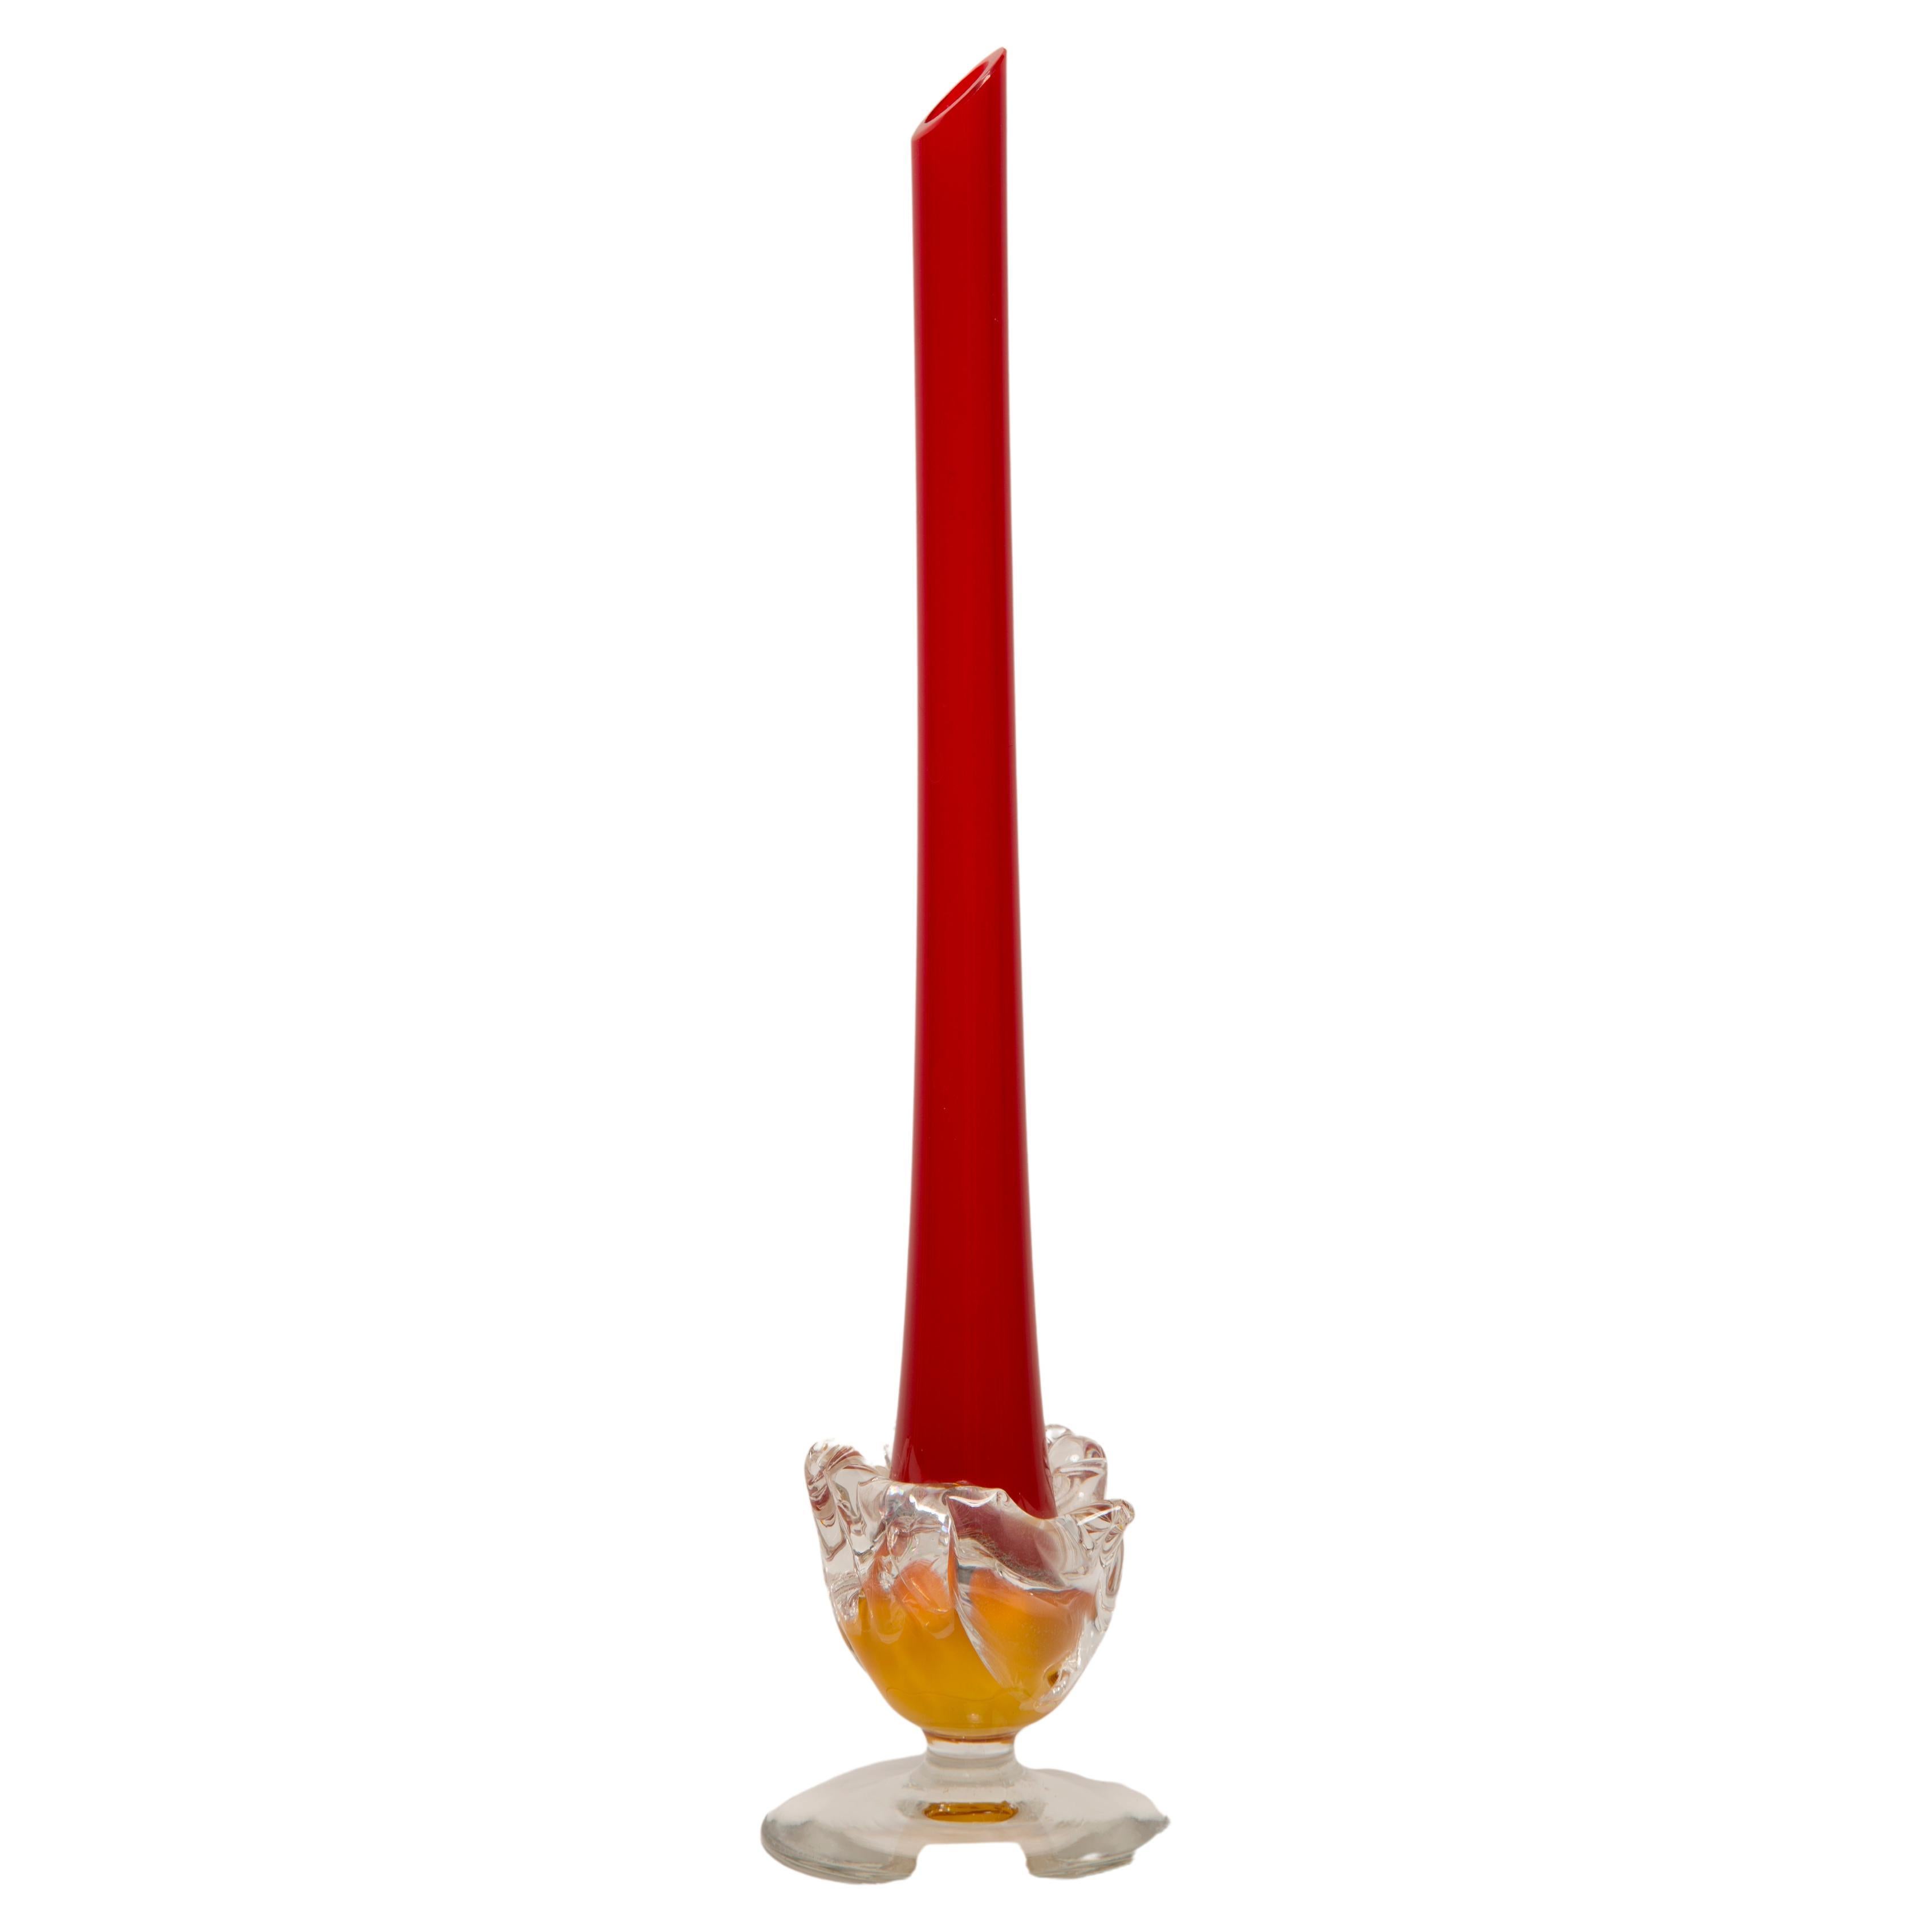 Midcentury Vintage Slim Red Decorative Glass Vase, Europe, 1960s For Sale